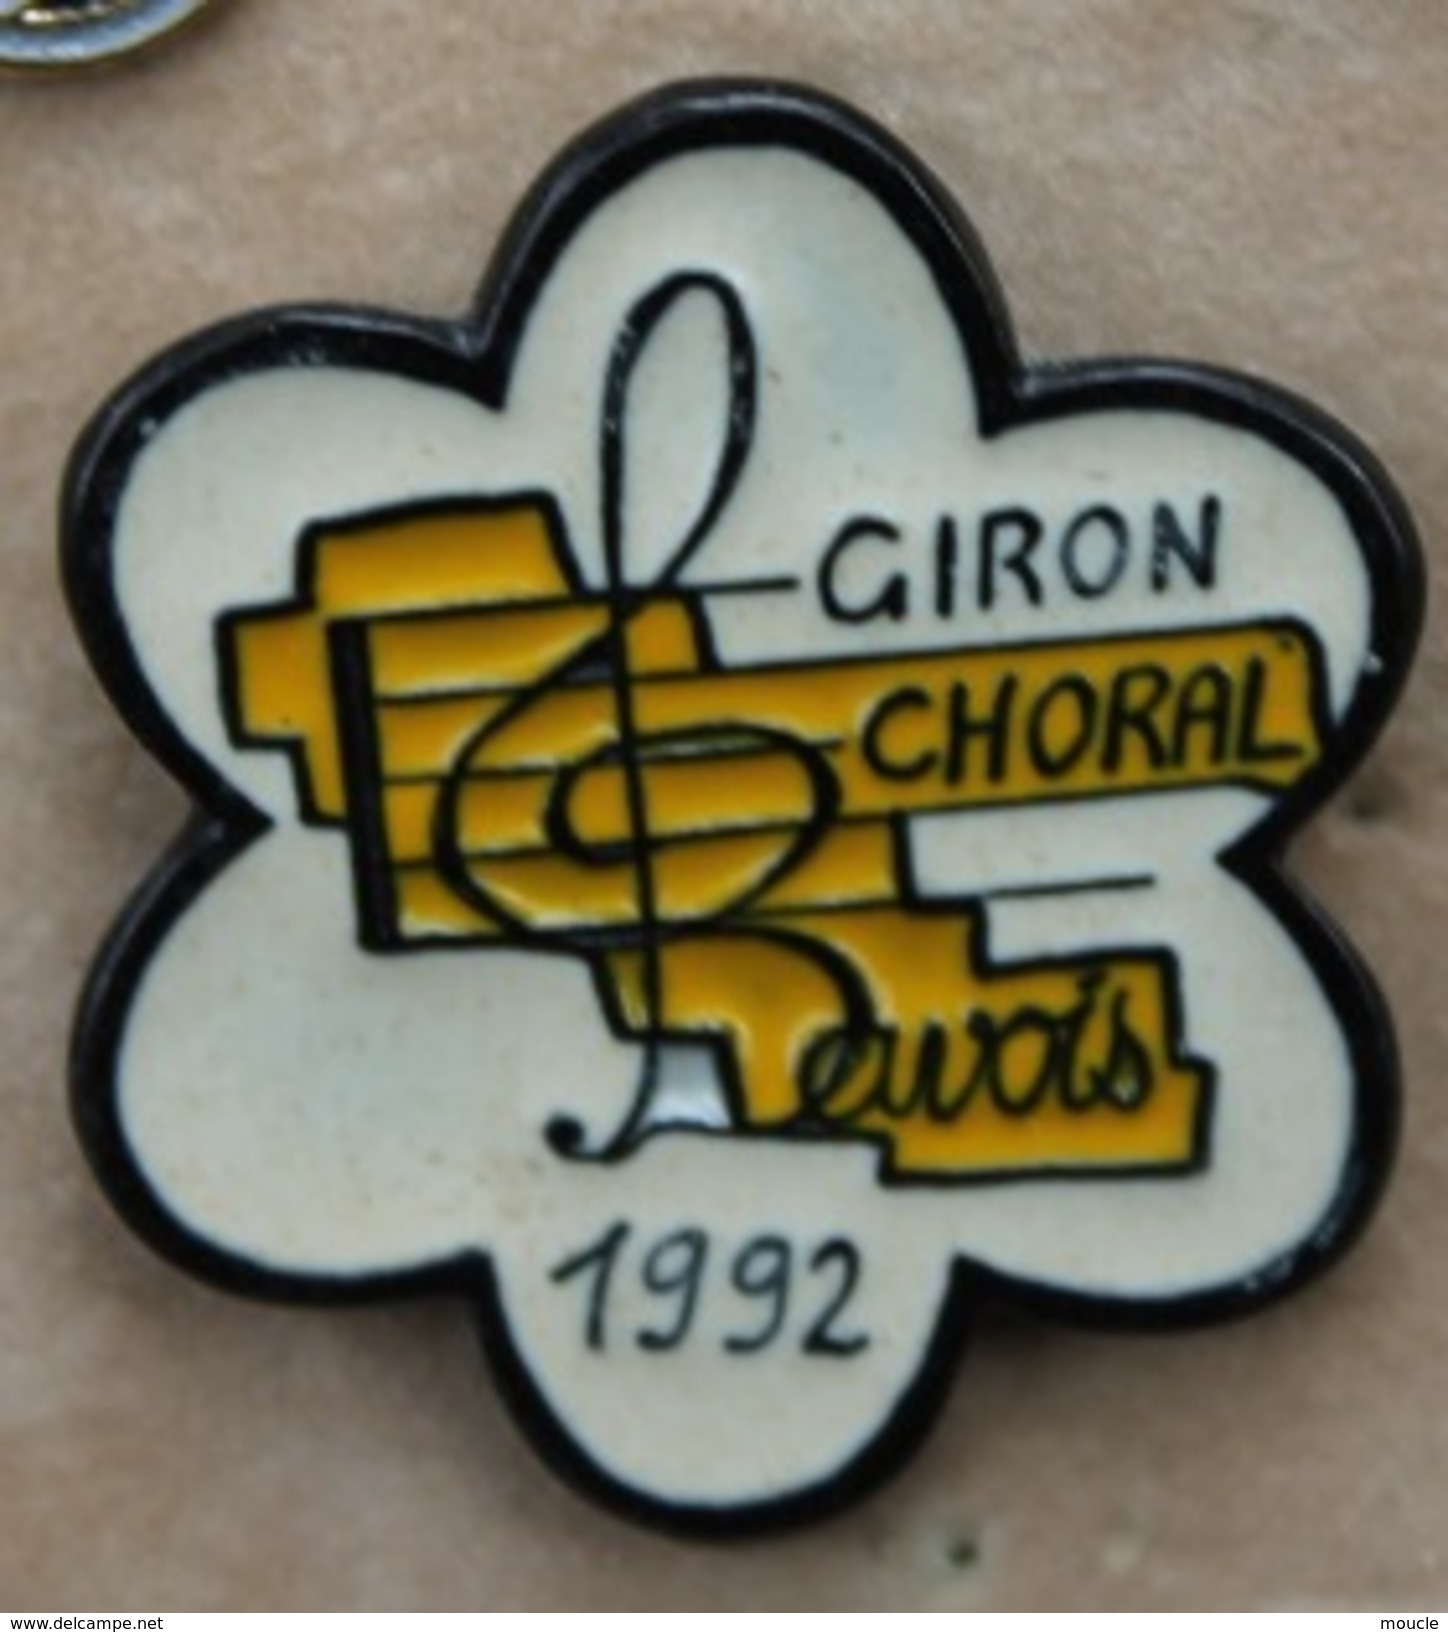 GIRON CHORAL BAVOIS 1992 - CANTON DE VAUD - SUISSE - SWISS -SCHWEIZ -  PARTITION - CLE -     (19) - Music